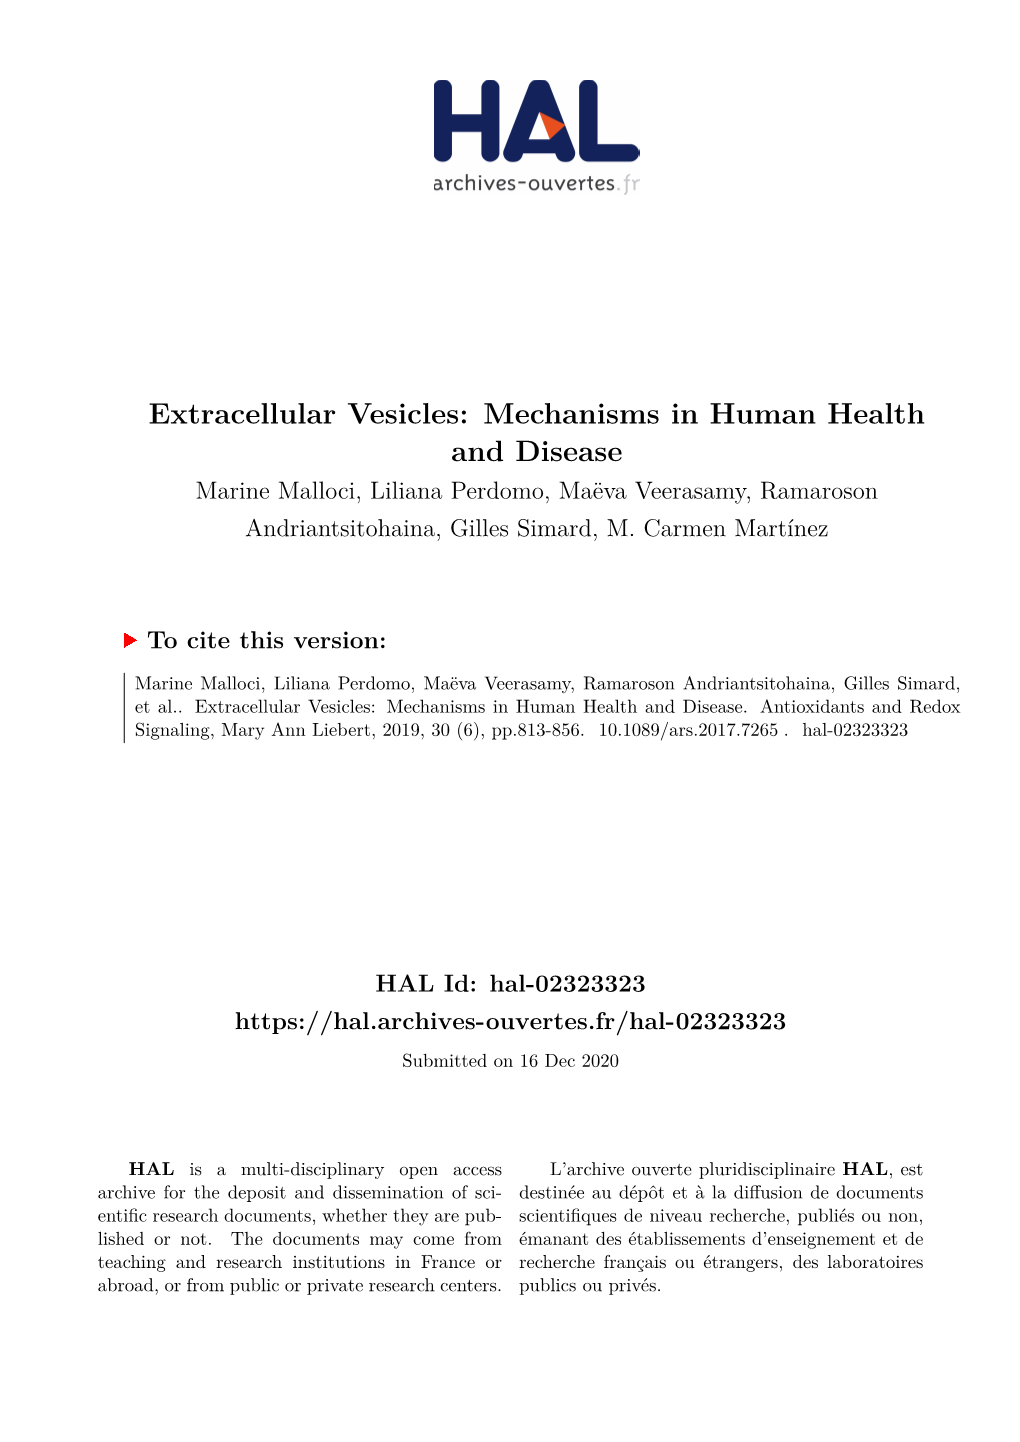 Extracellular Vesicles: Mechanisms in Human Health and Disease Marine Malloci, Liliana Perdomo, Maëva Veerasamy, Ramaroson Andriantsitohaina, Gilles Simard, M